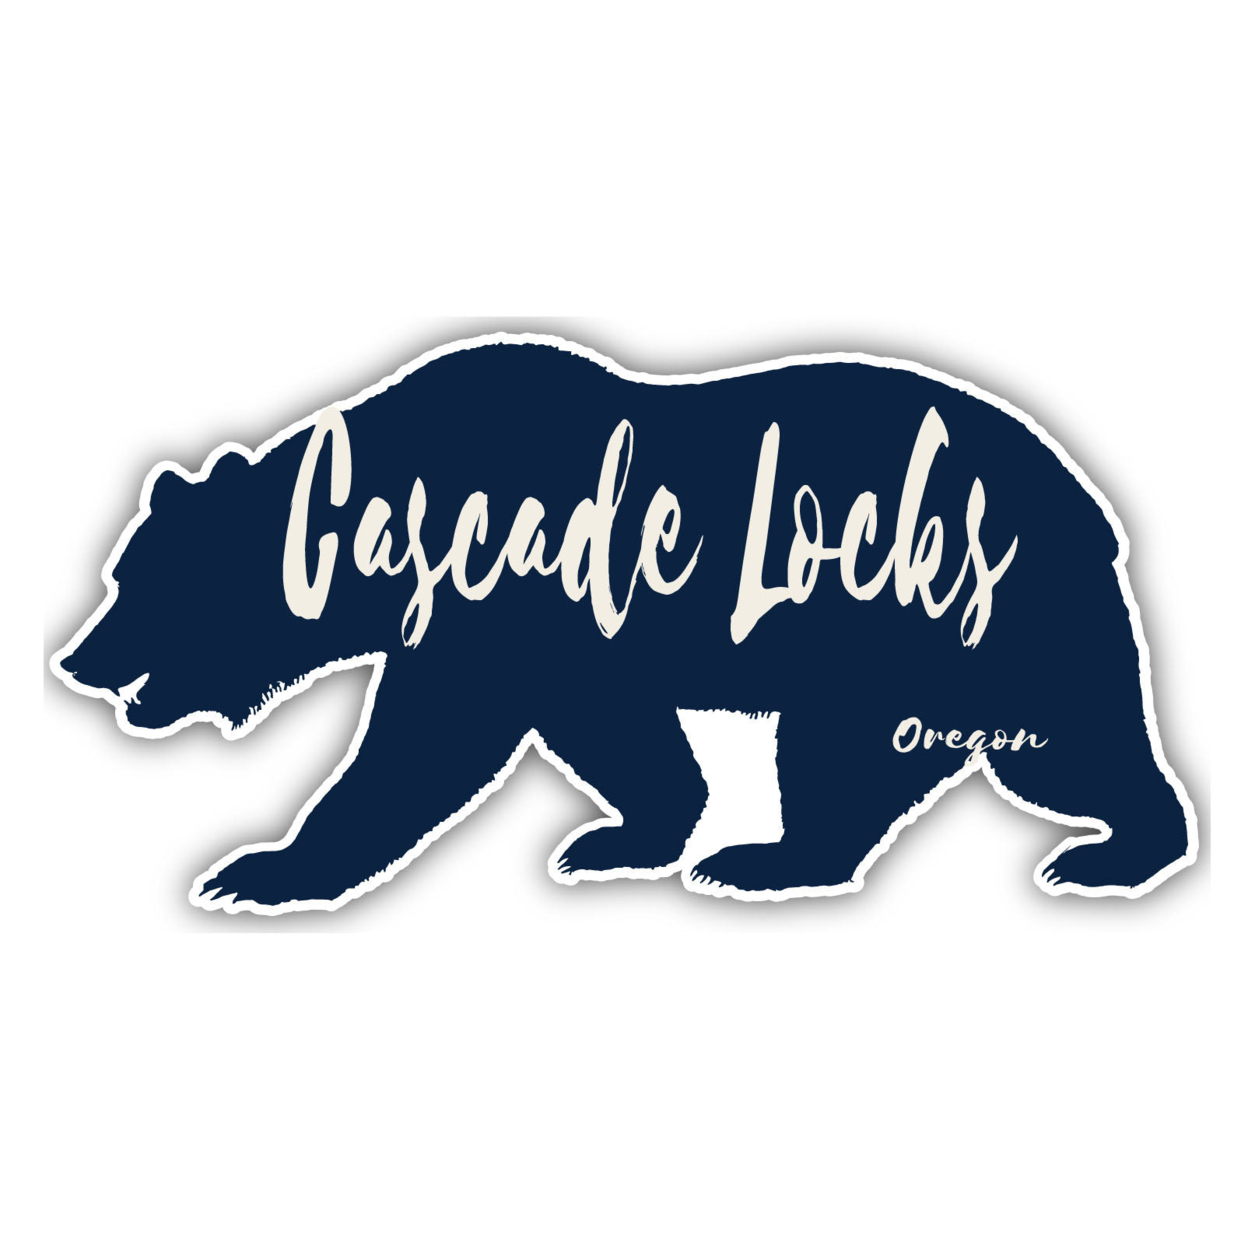 Cascade Locks Oregon Souvenir Decorative Stickers (Choose Theme And Size) - Single Unit, 6-Inch, Adventures Awaits